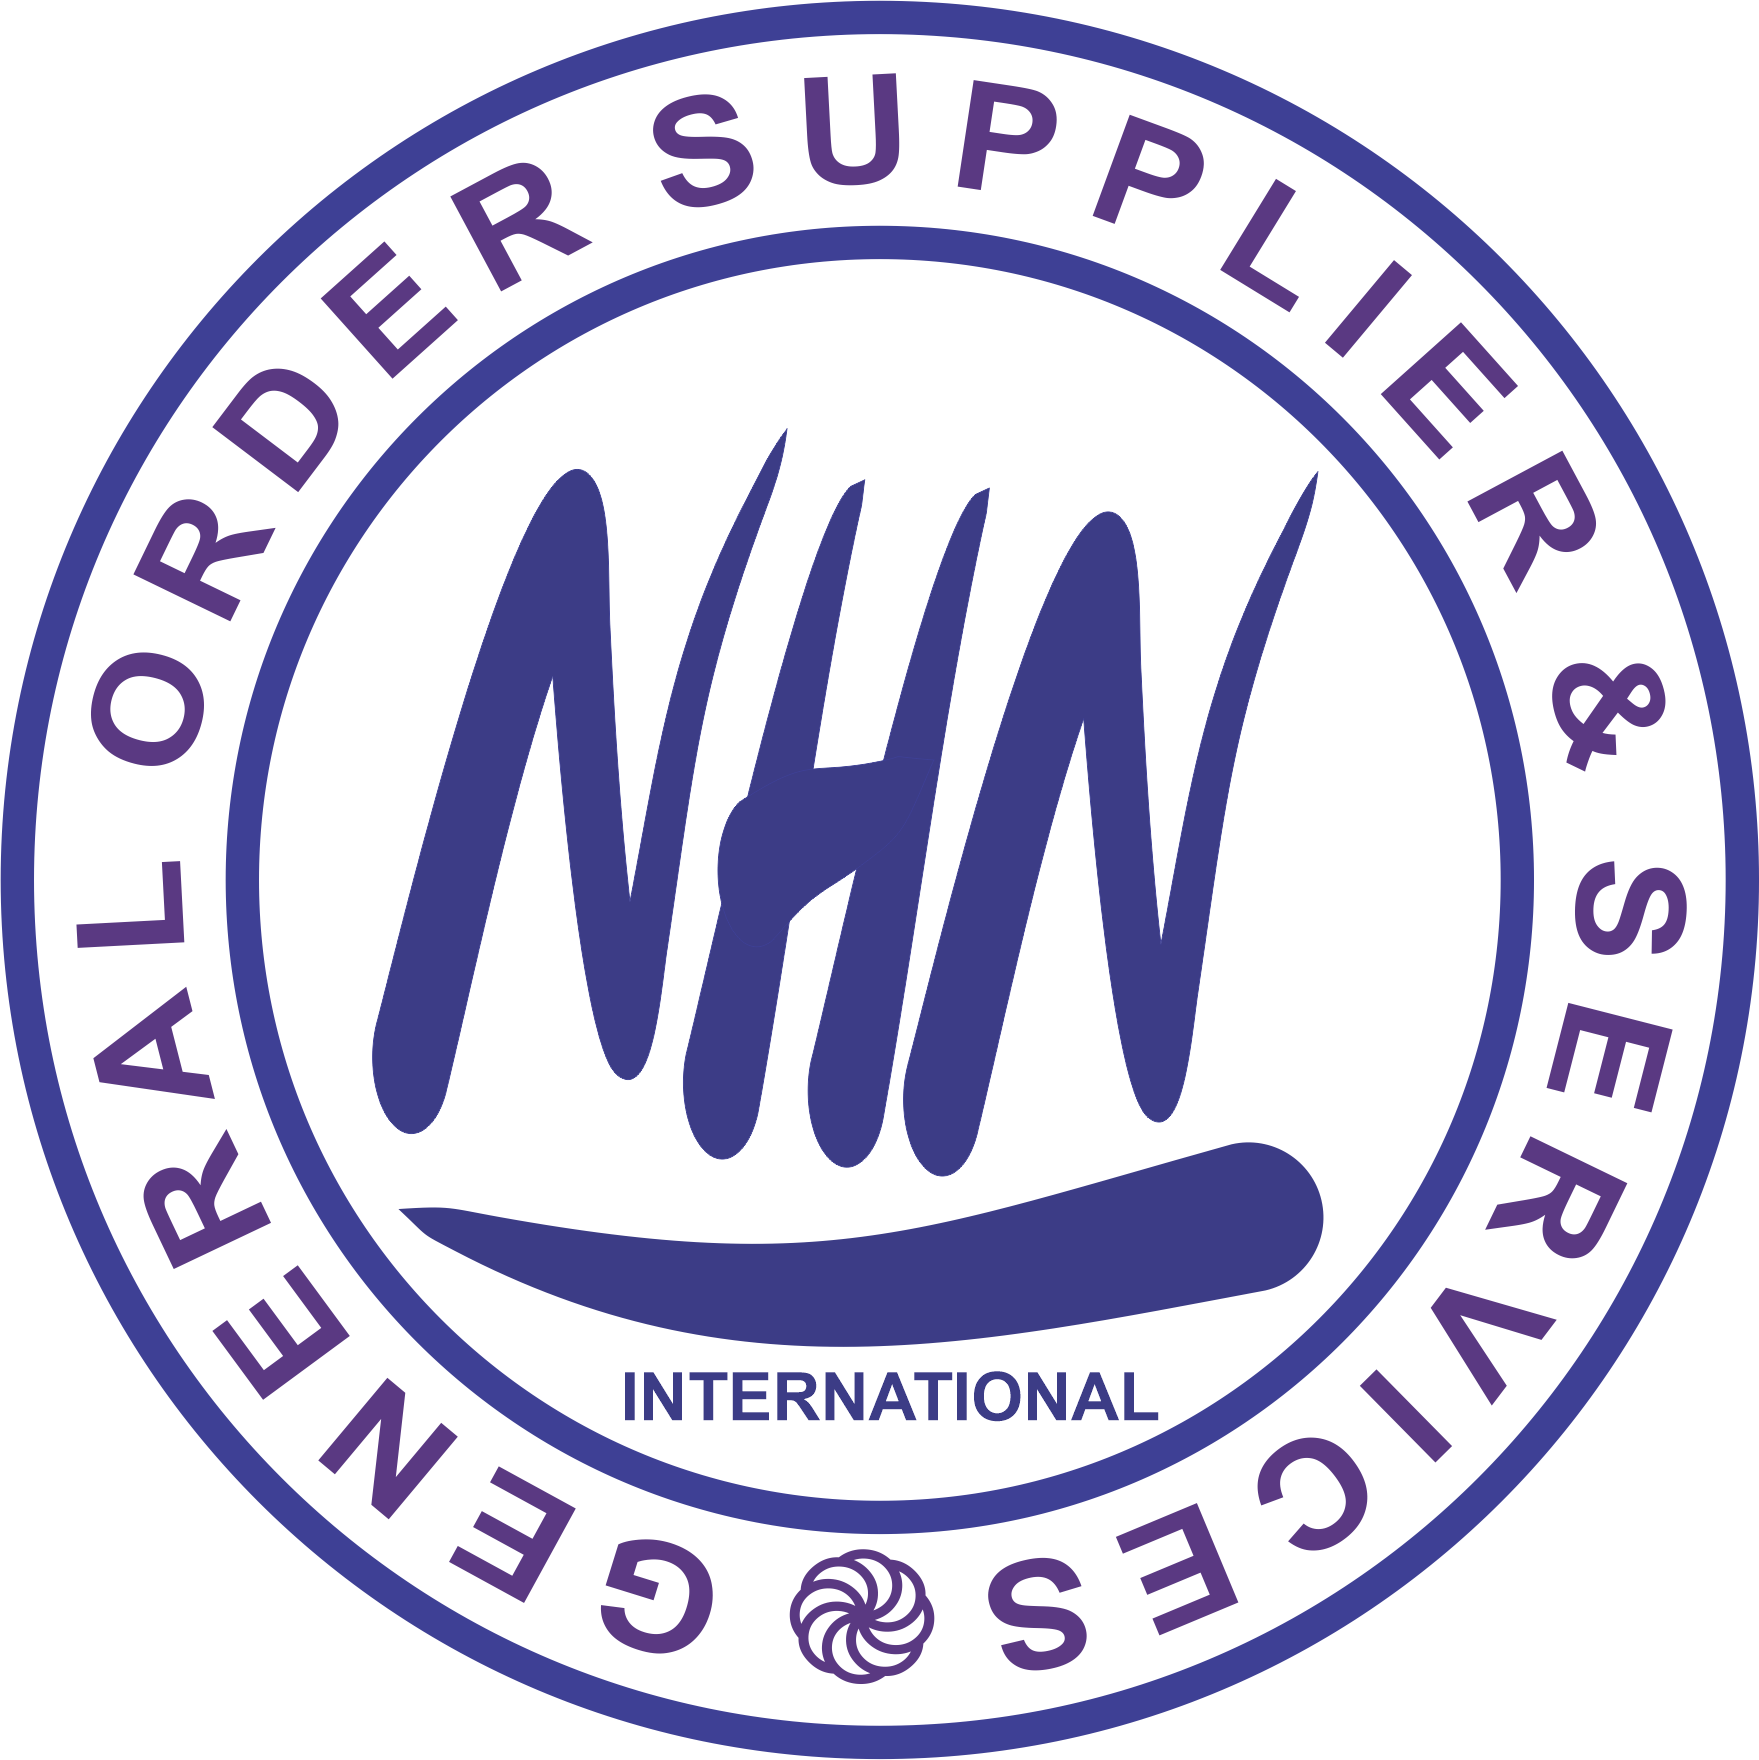 NHN Logo